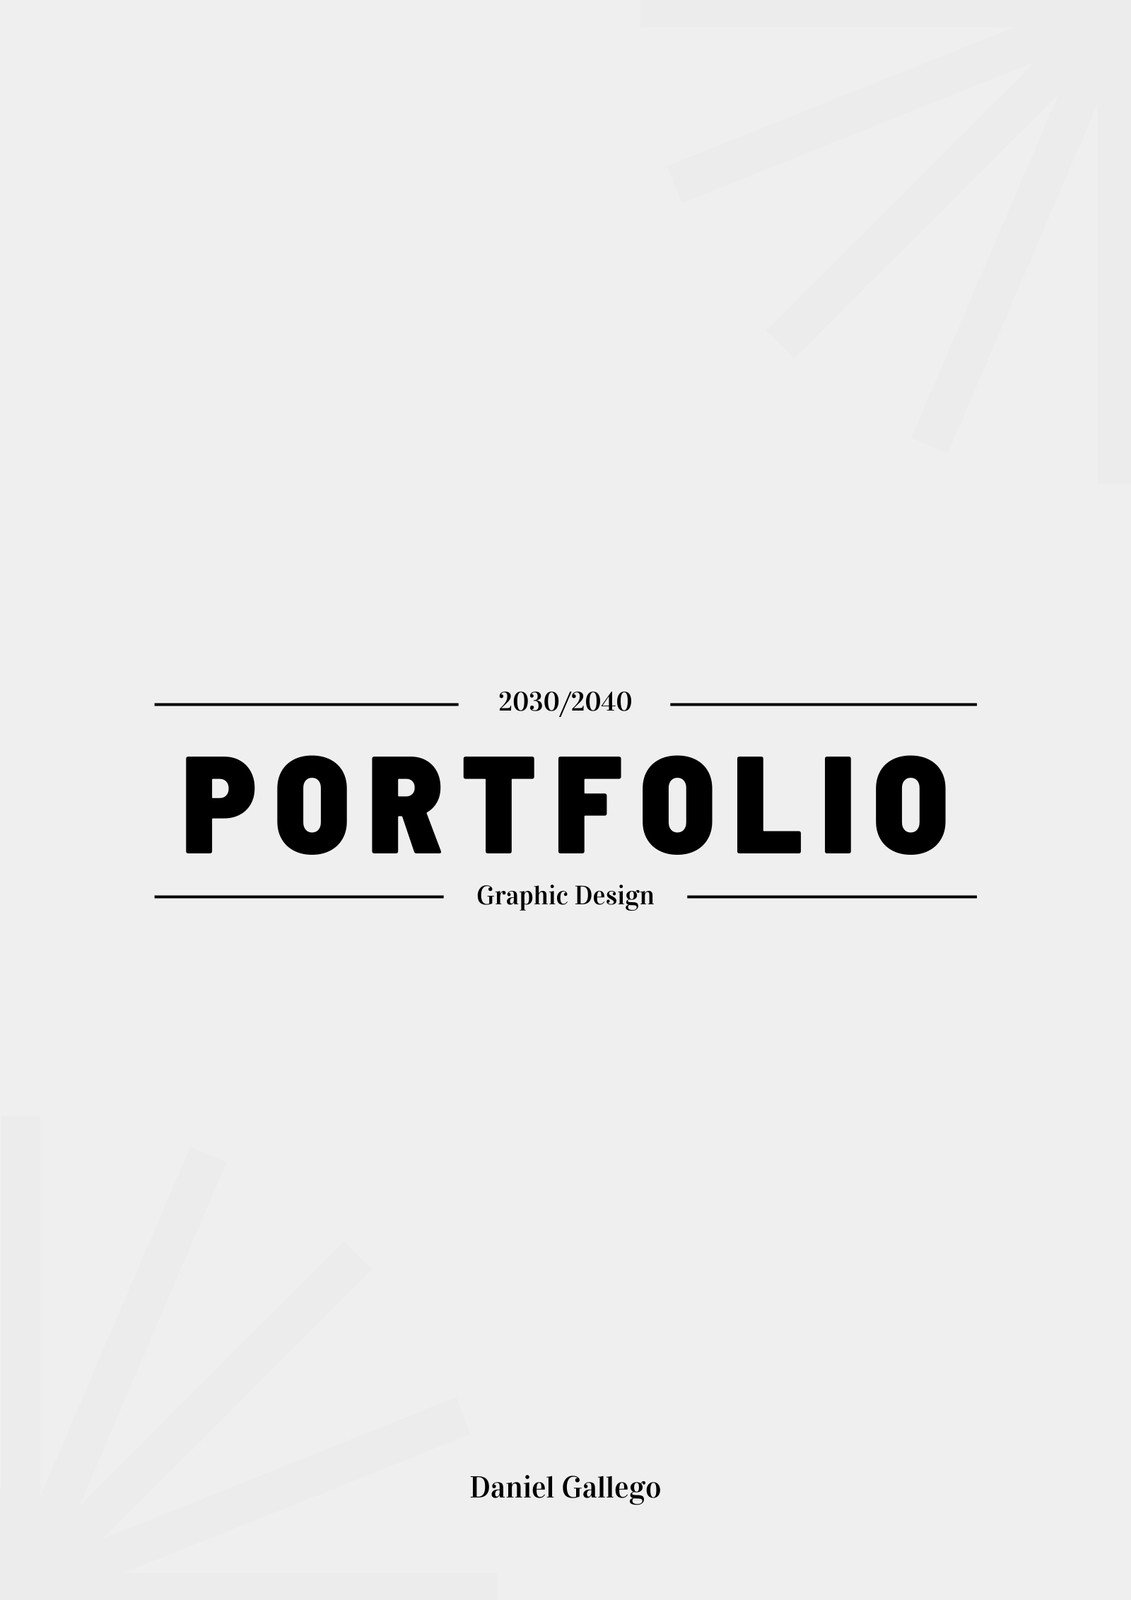 Professional Portfolio Cover Page Design